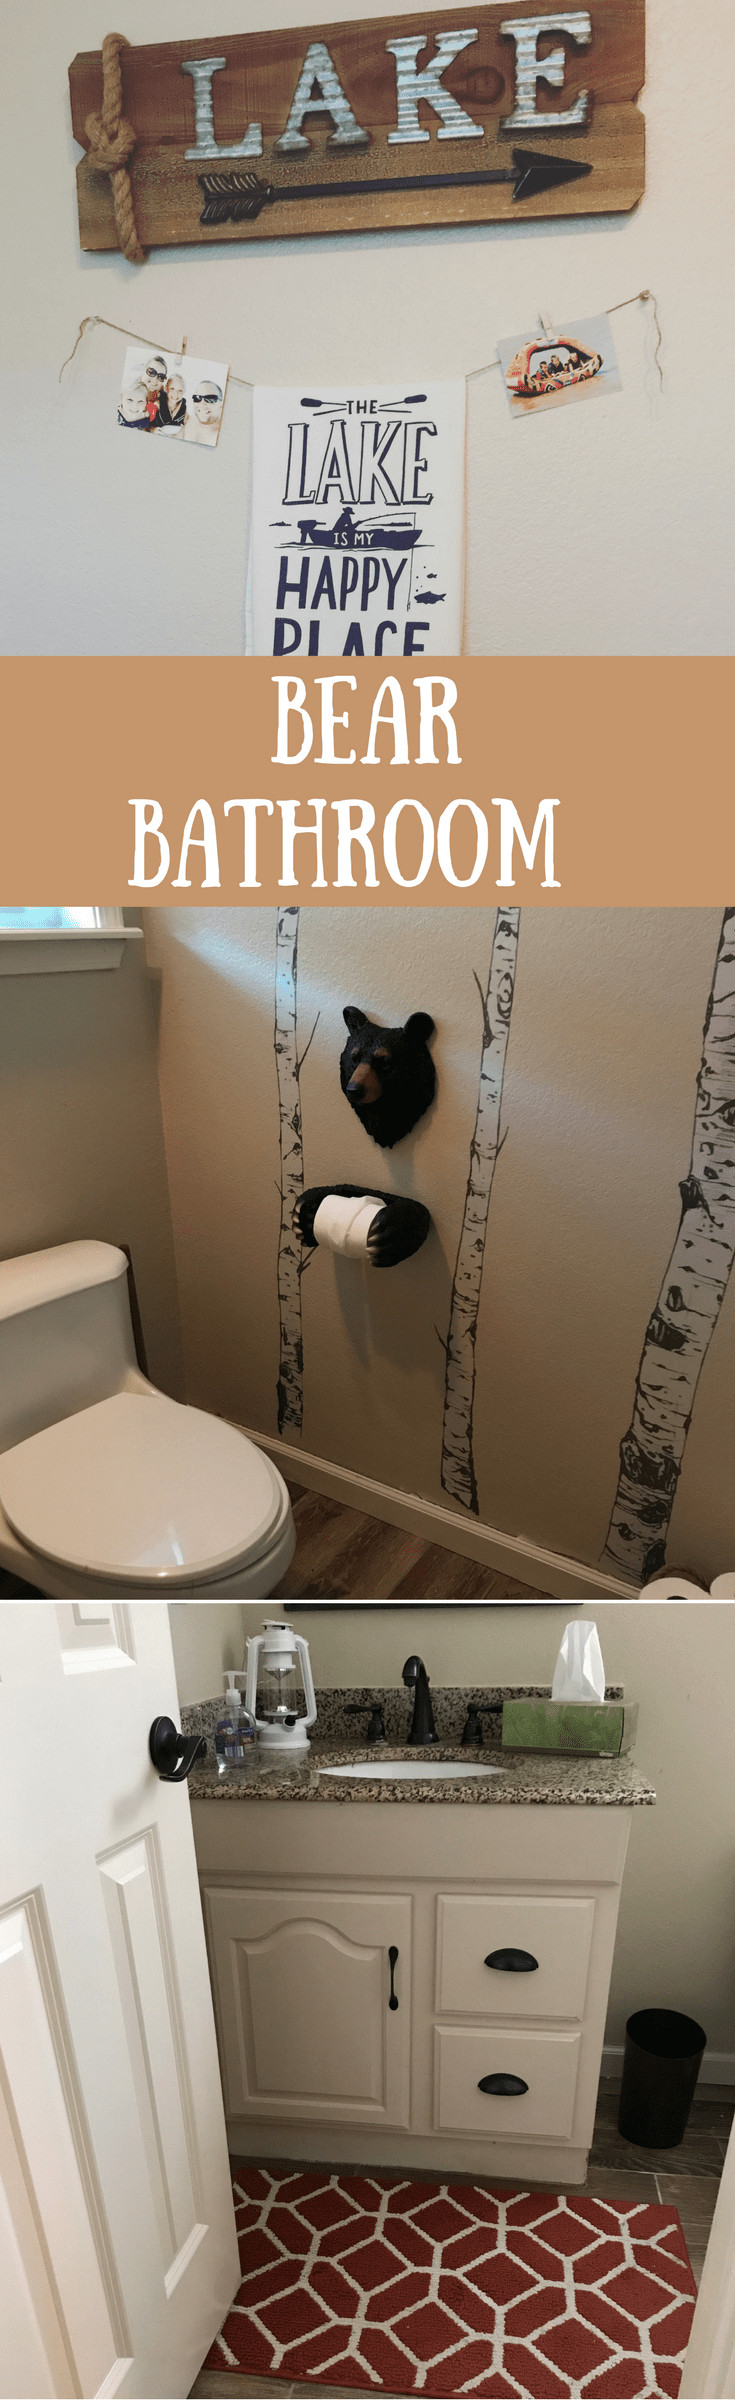 Bear Bathroom Update - Fun for an Outdoor or Lake Style Bathroom